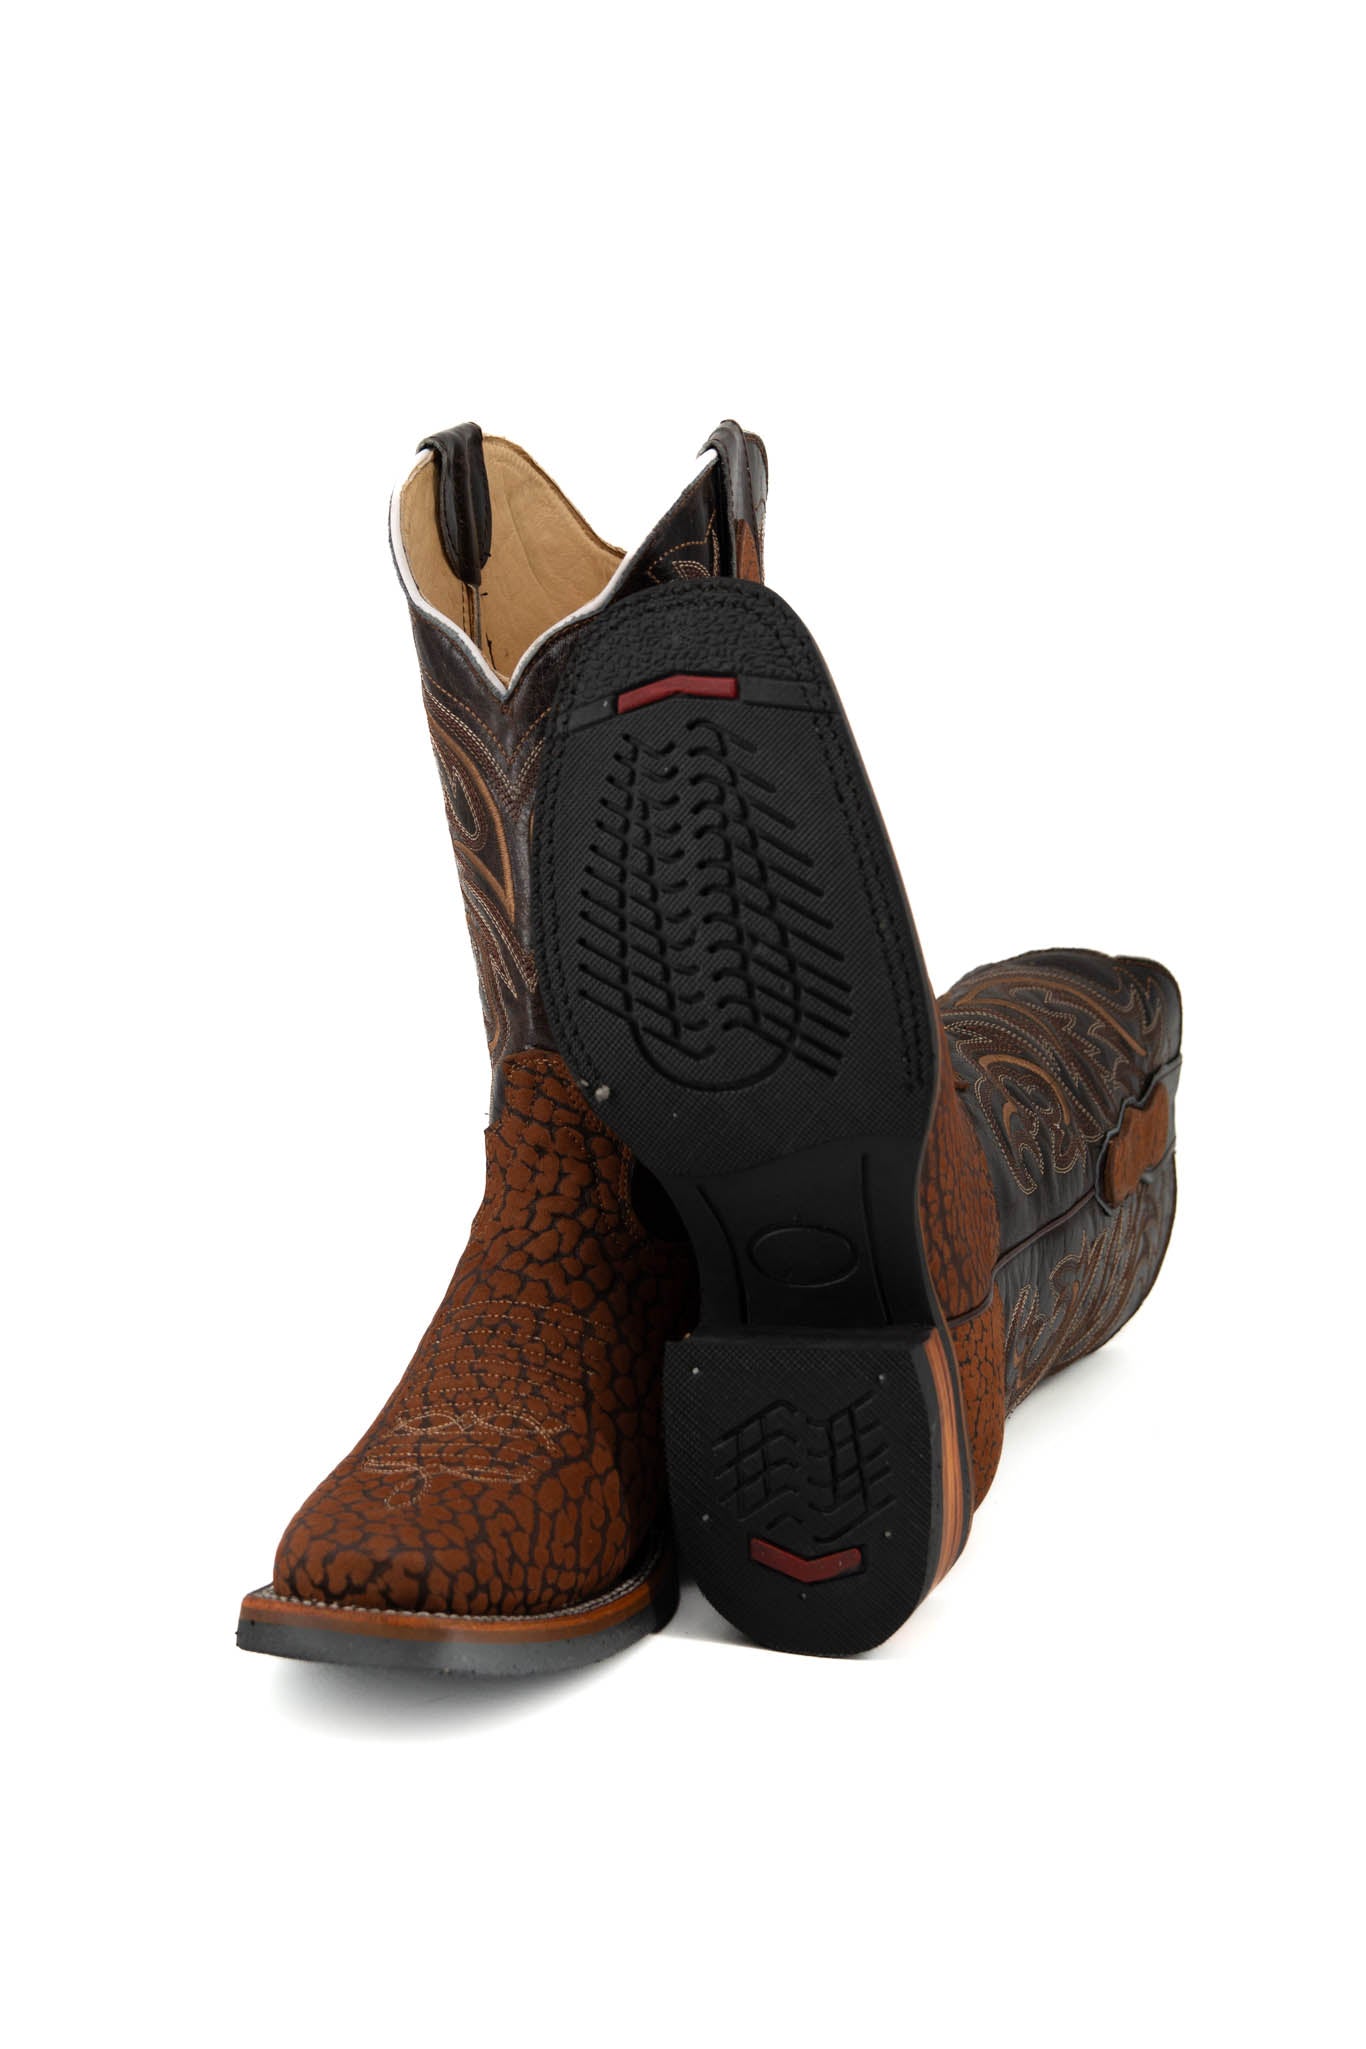 250 Cuello De Toro Rodeo Cowboy Boot